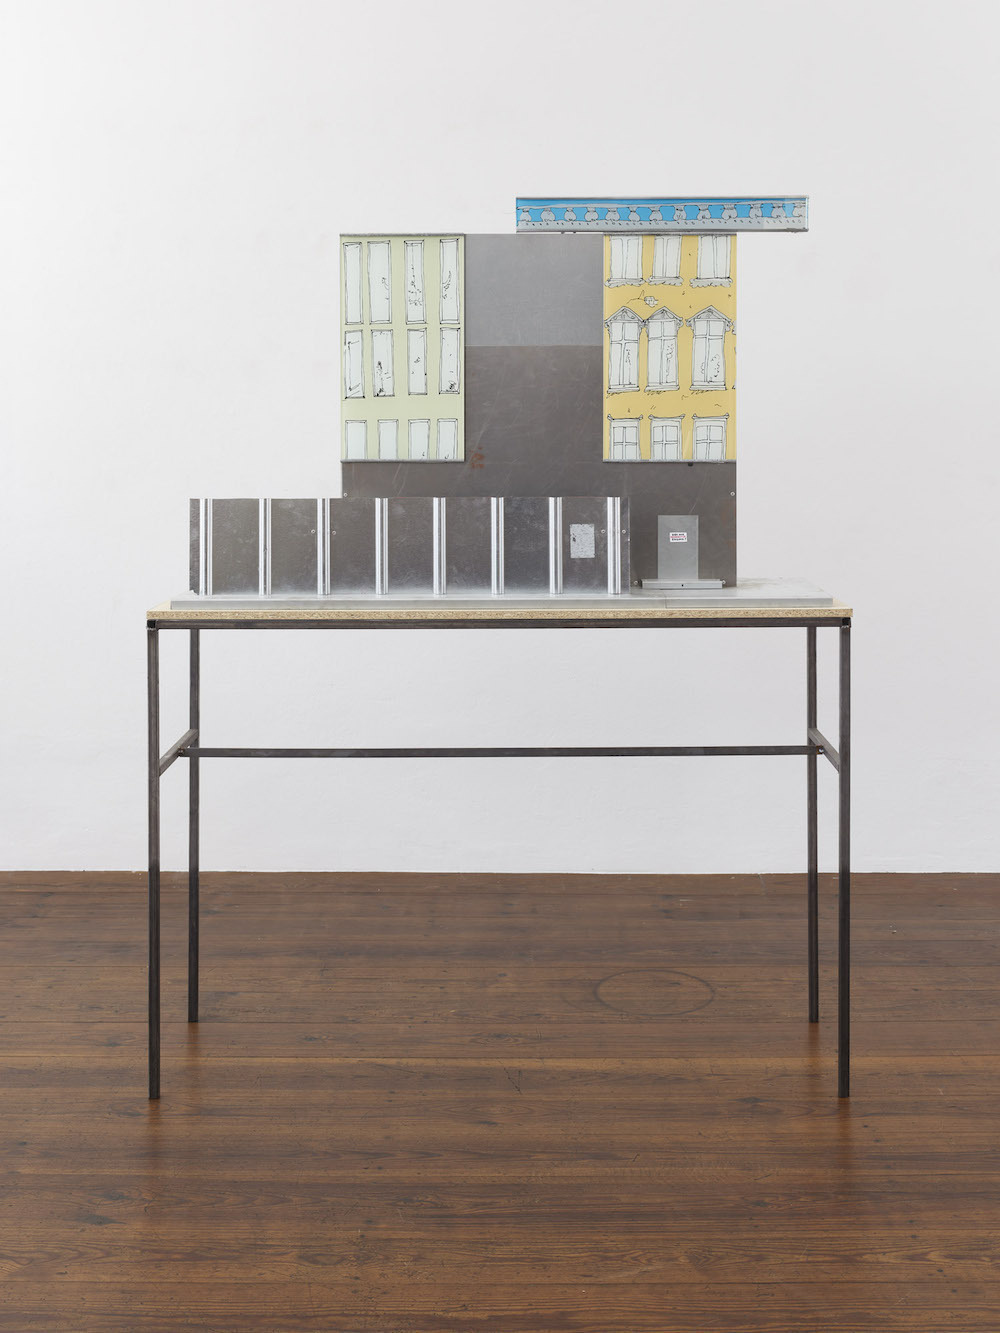 Wilhelm Klotzek, "Humboldt Forum Mitarbeitereingang", 2020, Partially galvanized sheet steel, silkscreen on glass, paper, 142 x 41,5 x 175,5 cm